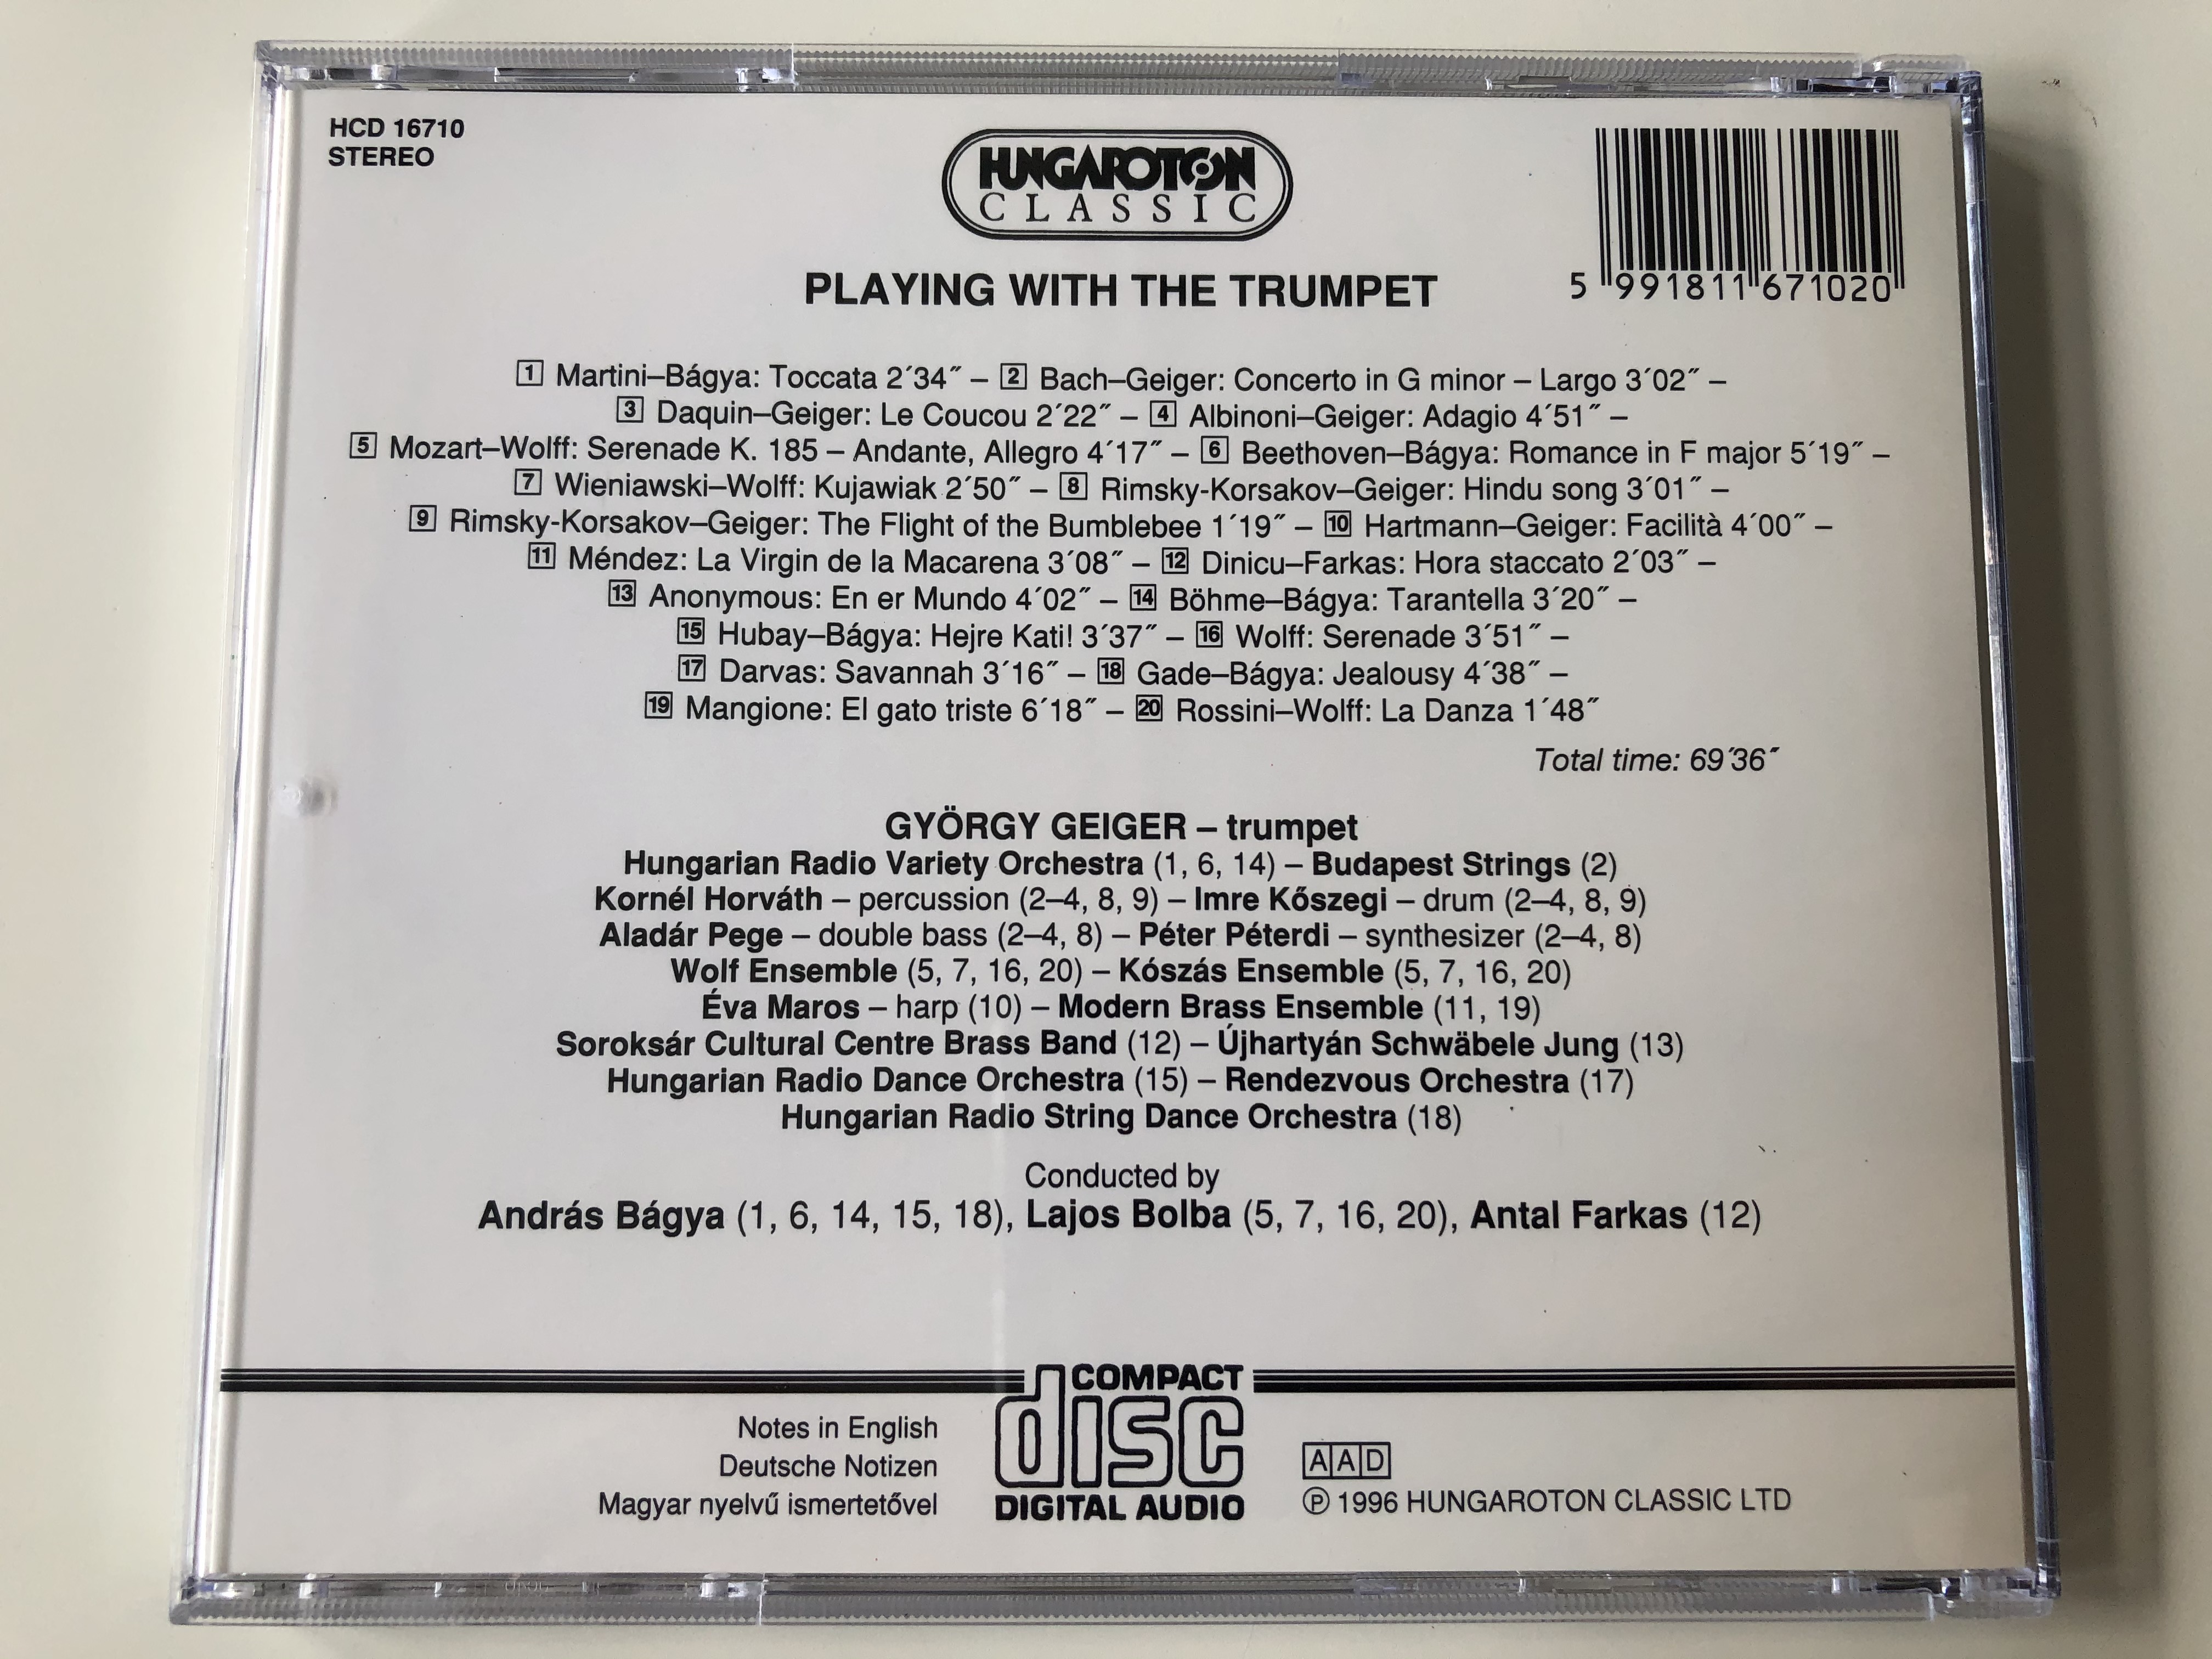 gy-rgy-geiger-playing-with-the-trumpet-j-tszom-a-trombit-val-hungaroton-classic-audio-cd-1996-stereo-hcd-16710-hcd-16710-5-.jpg